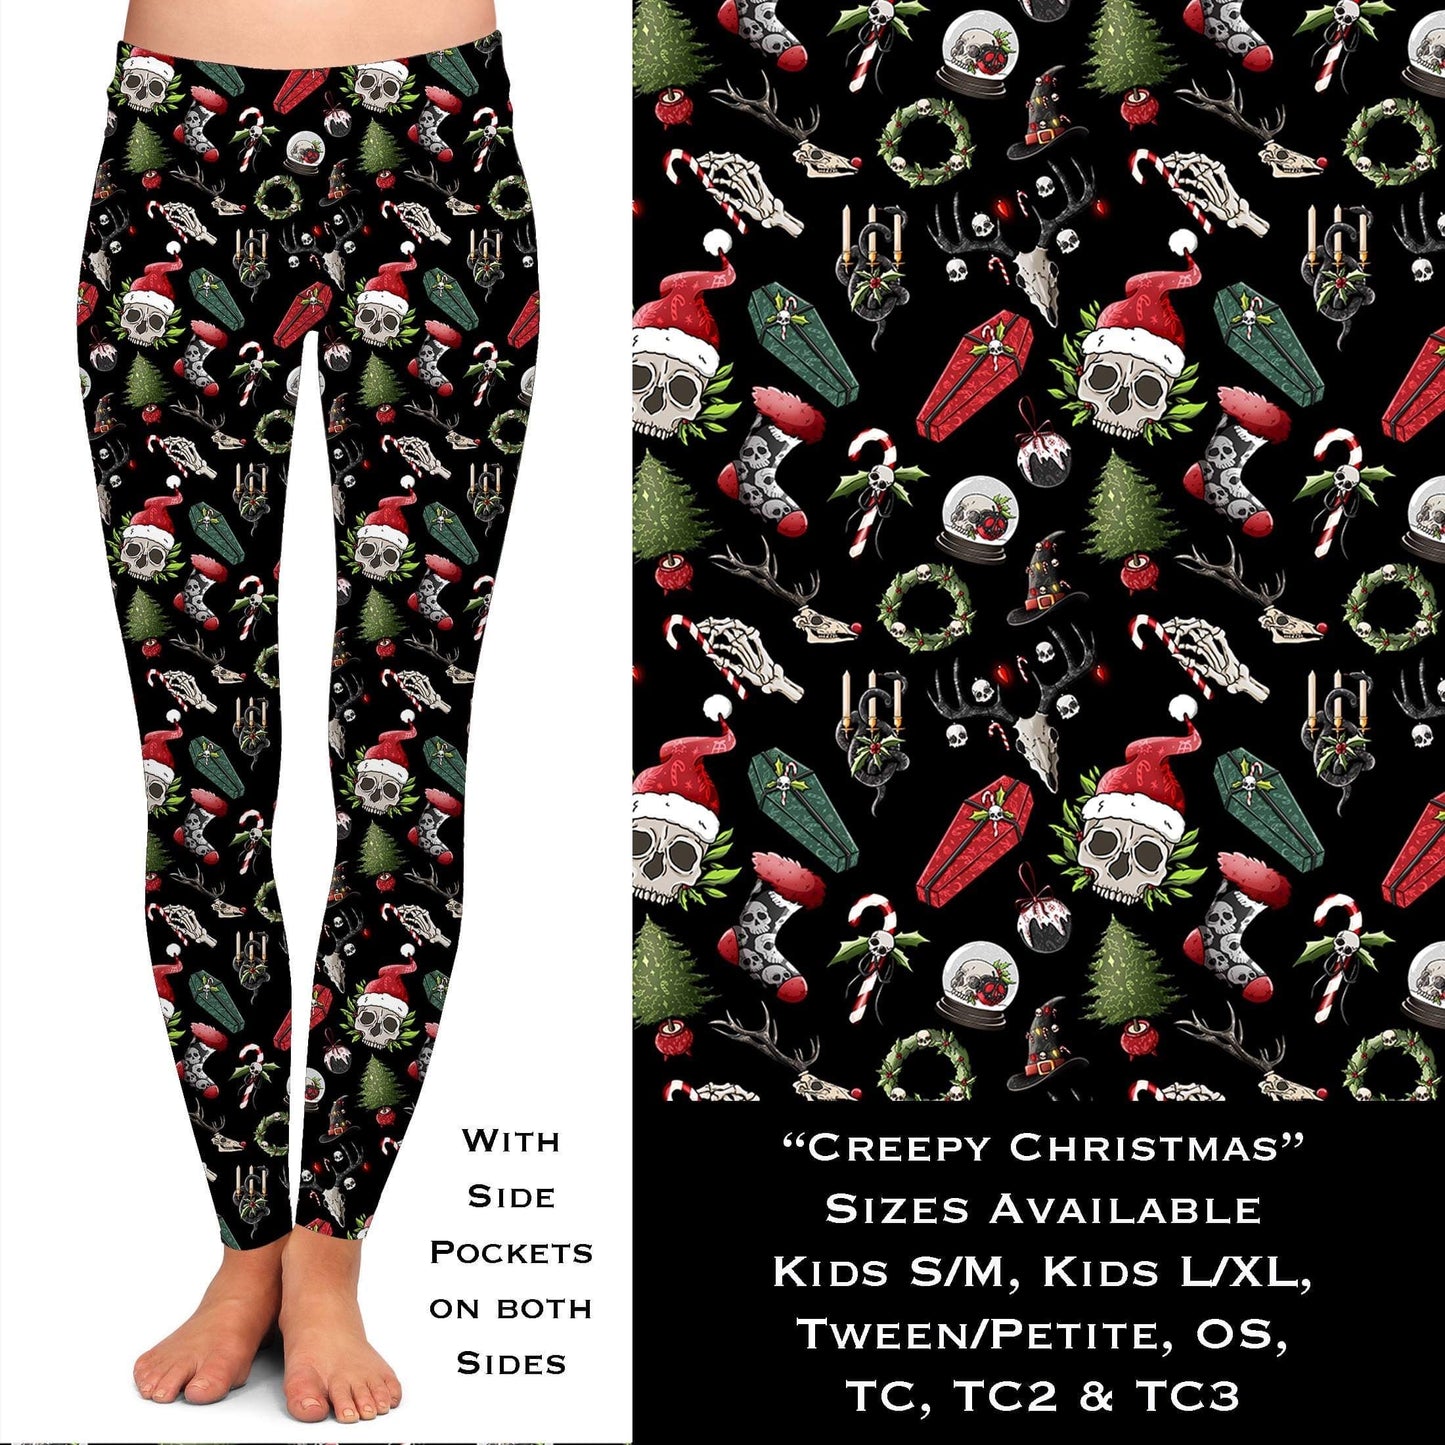 Creepy Christmas - Leggings with Pockets